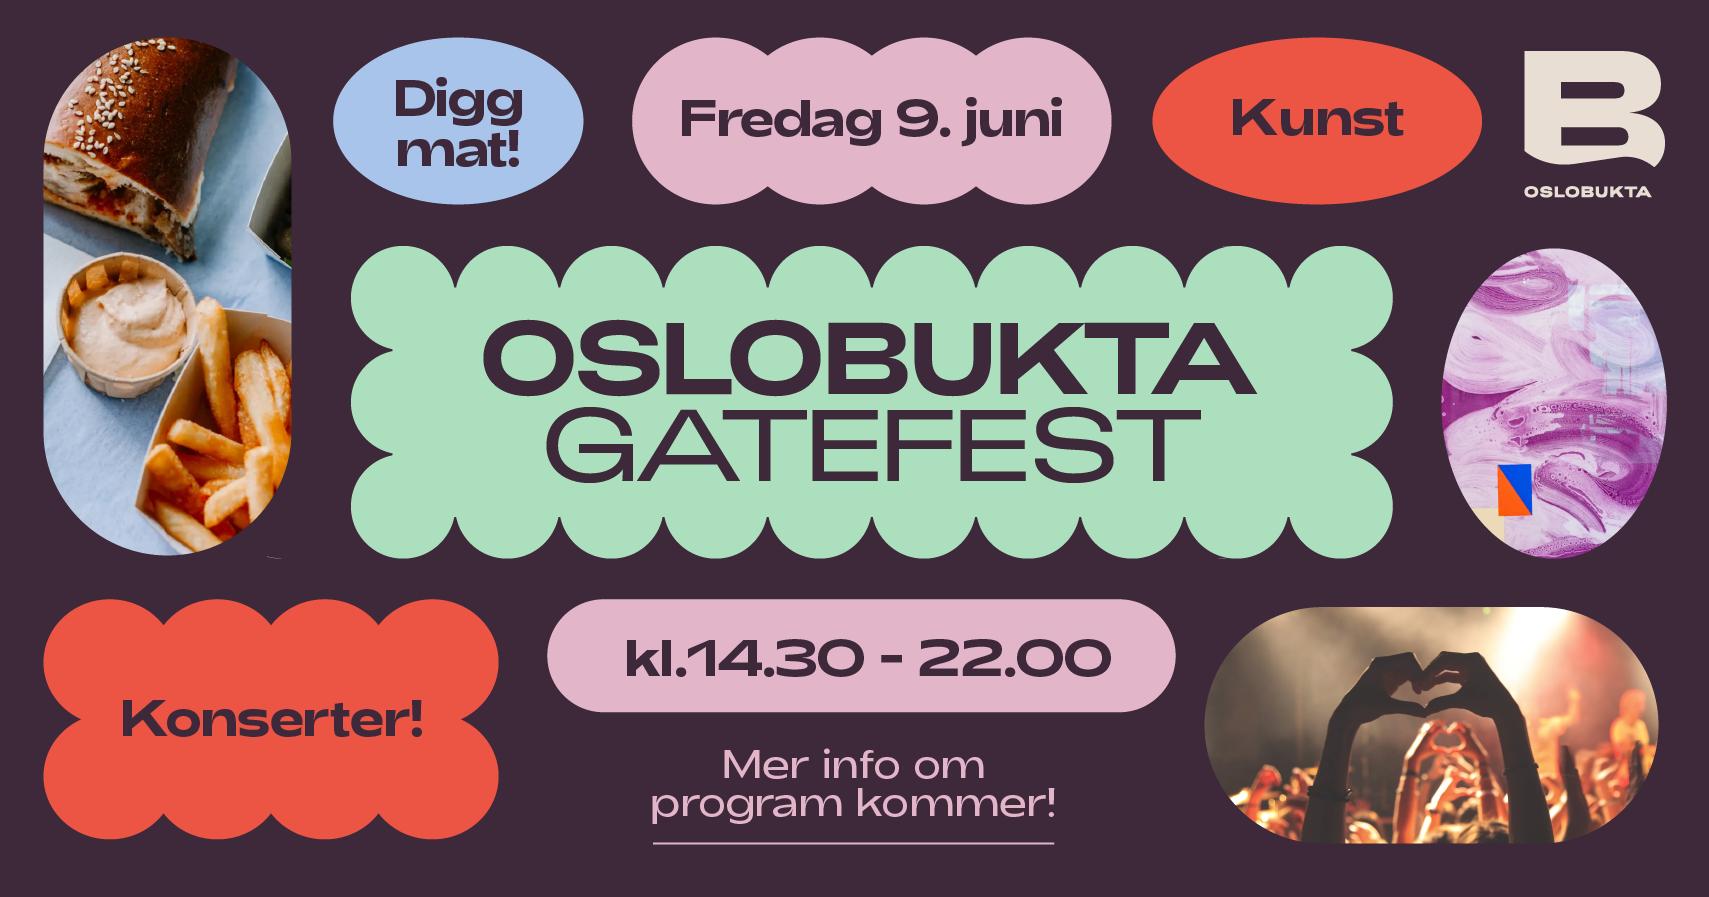 Oslobukta gatefest